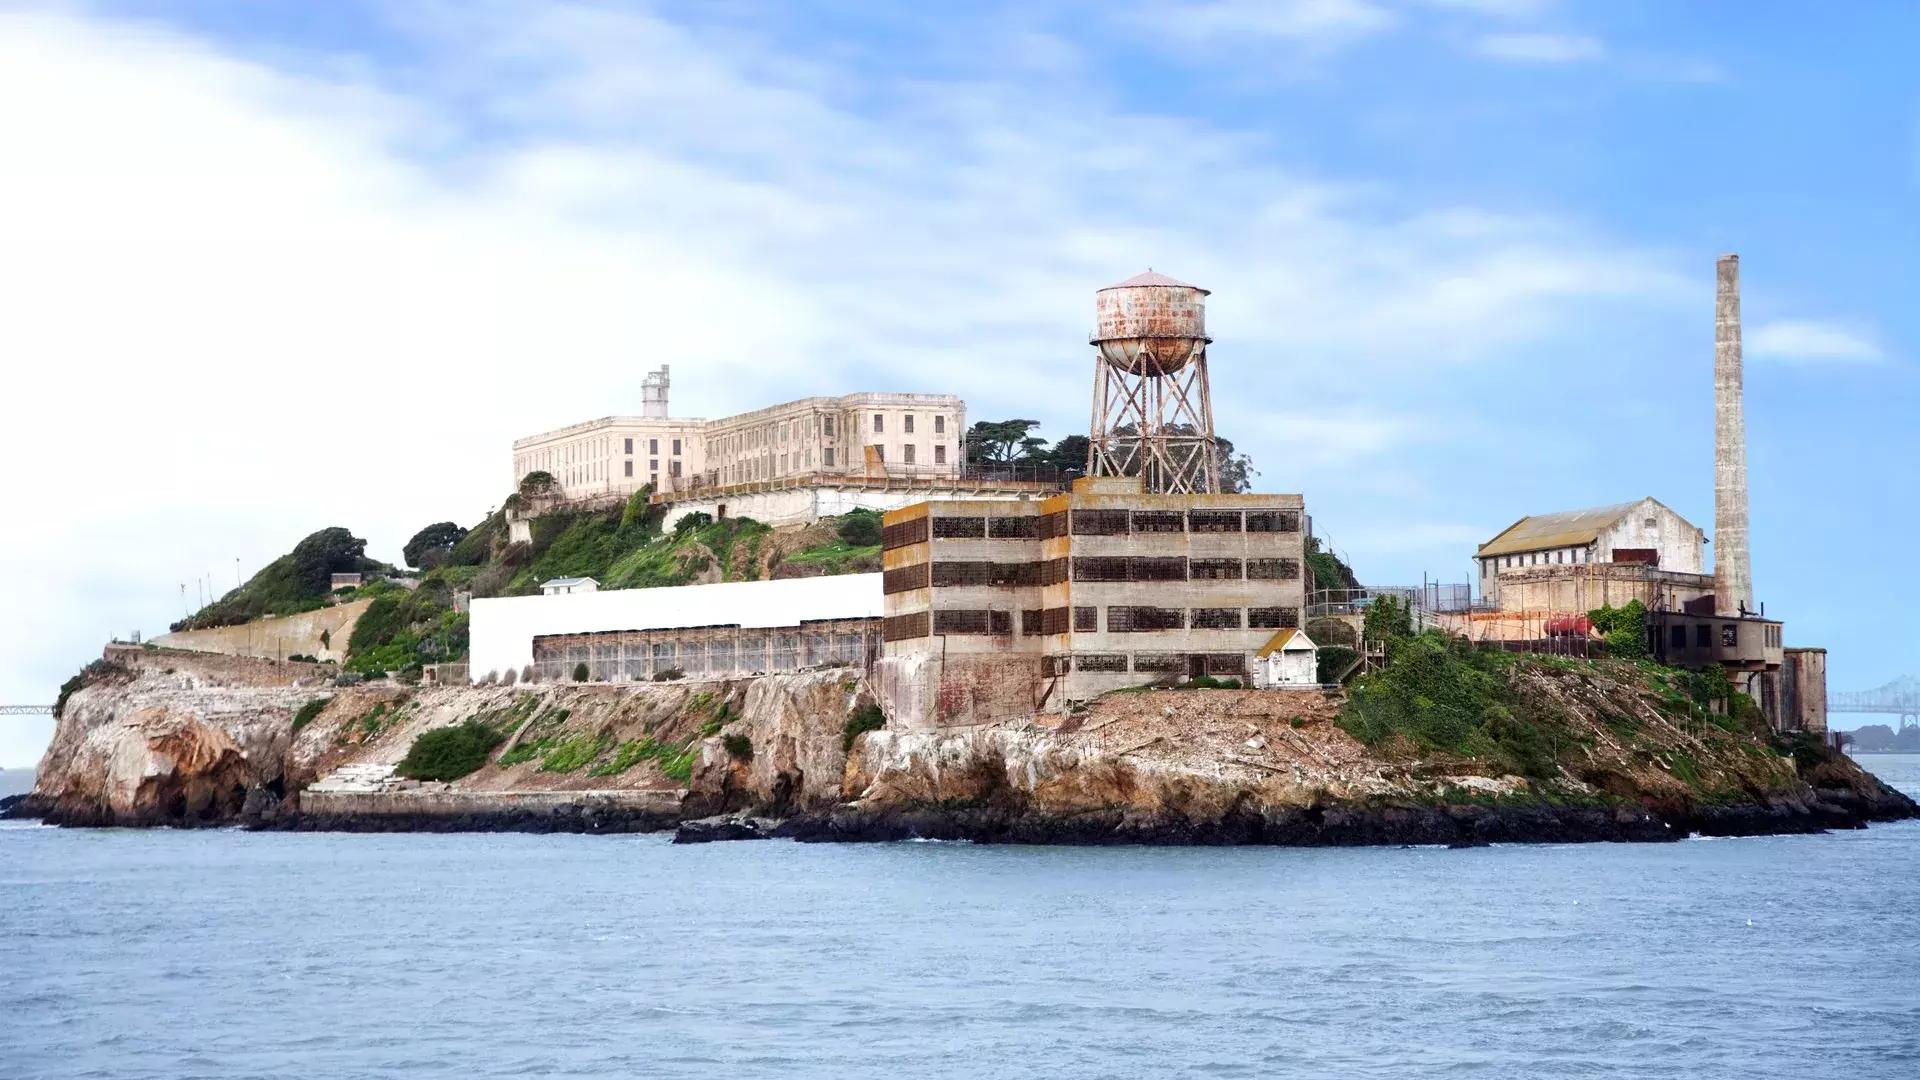 Alcatraz vista de barco